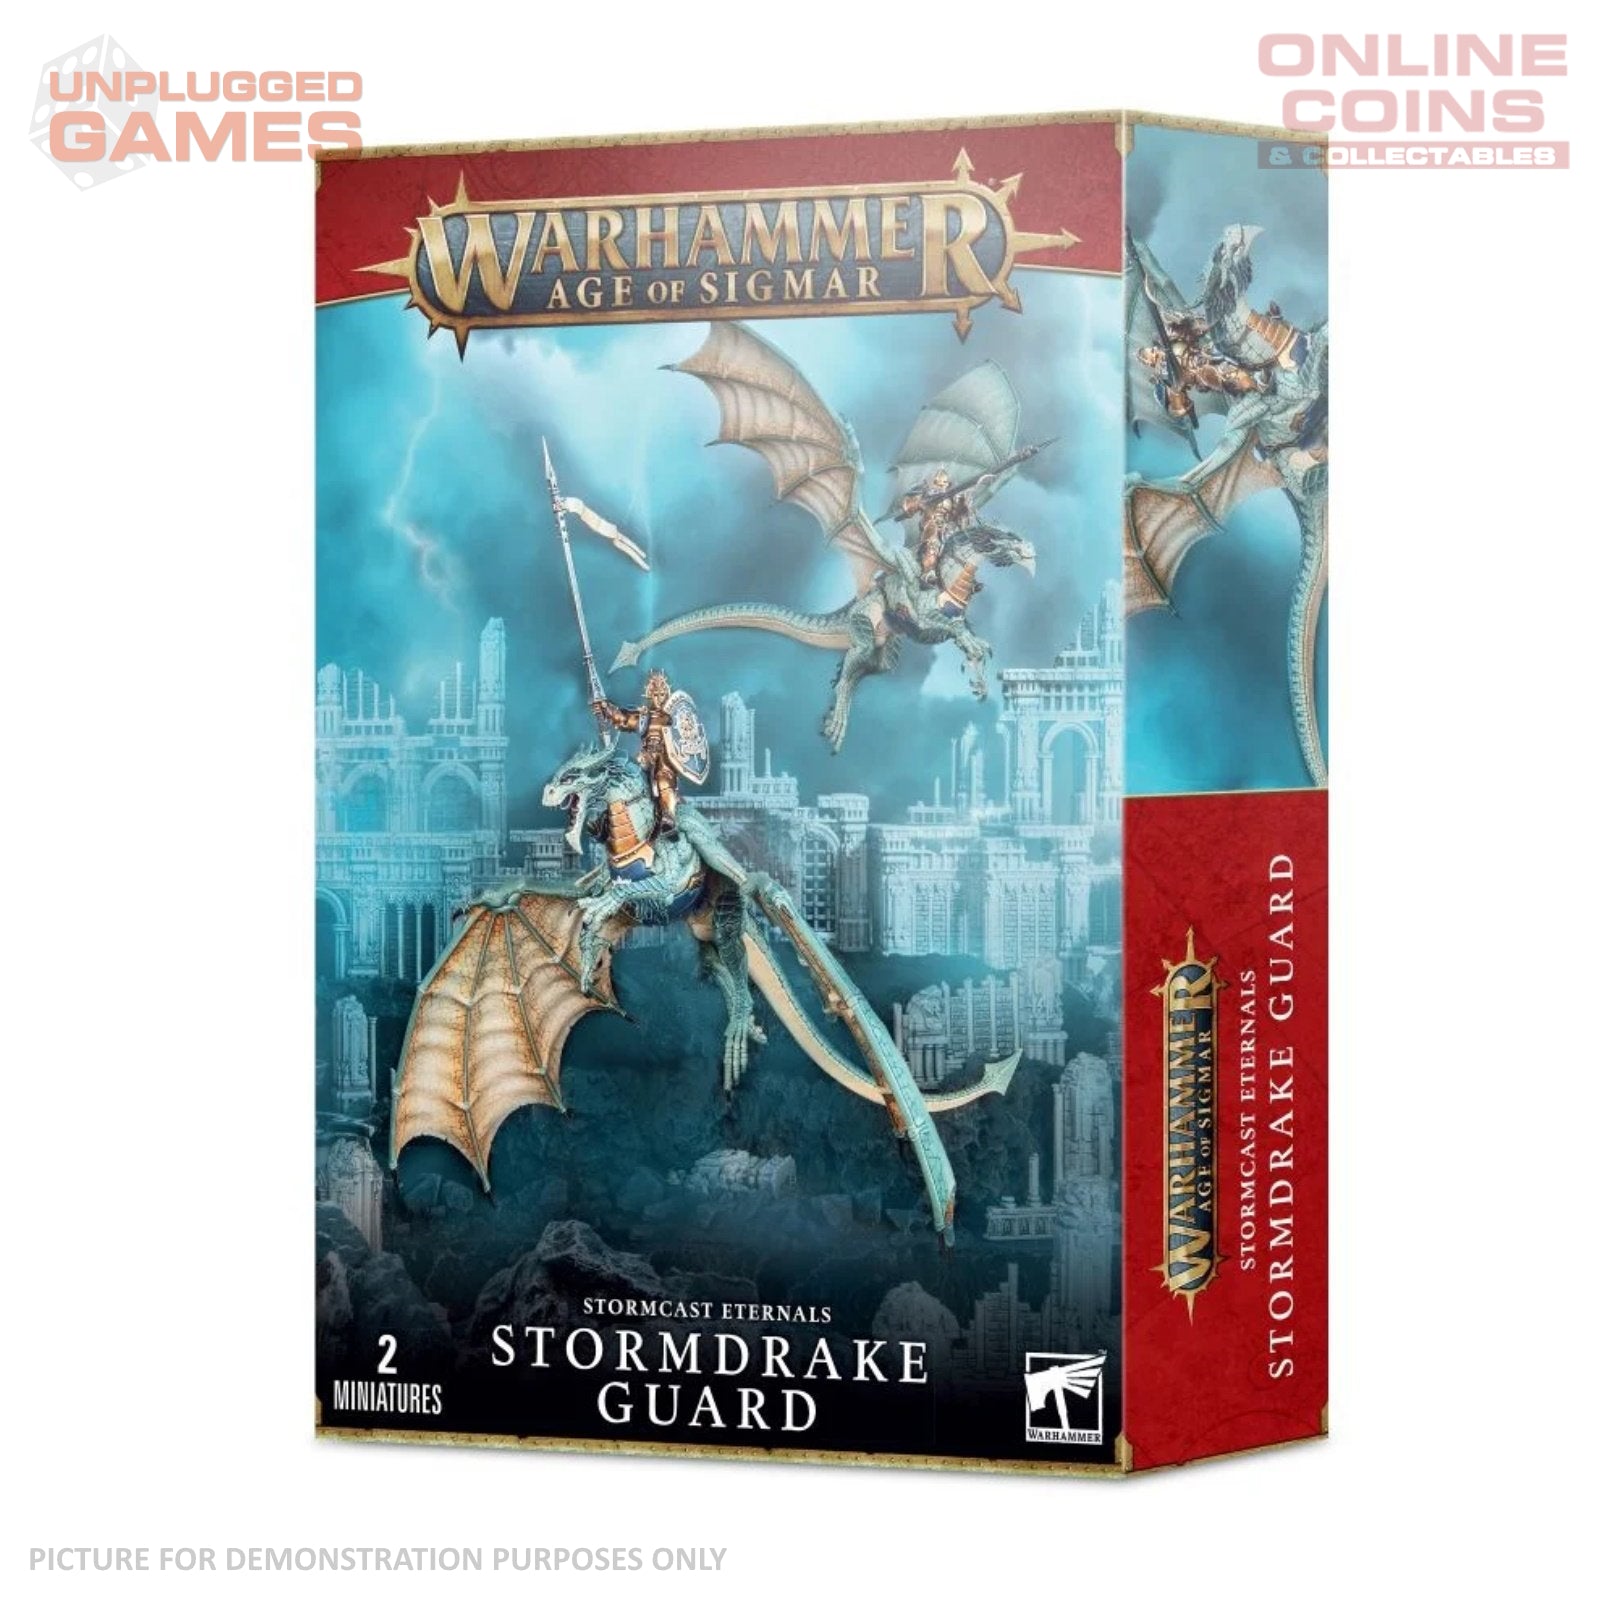 Warhammer Age of Sigmar - Stormcast Eternals Stormdrake Guard